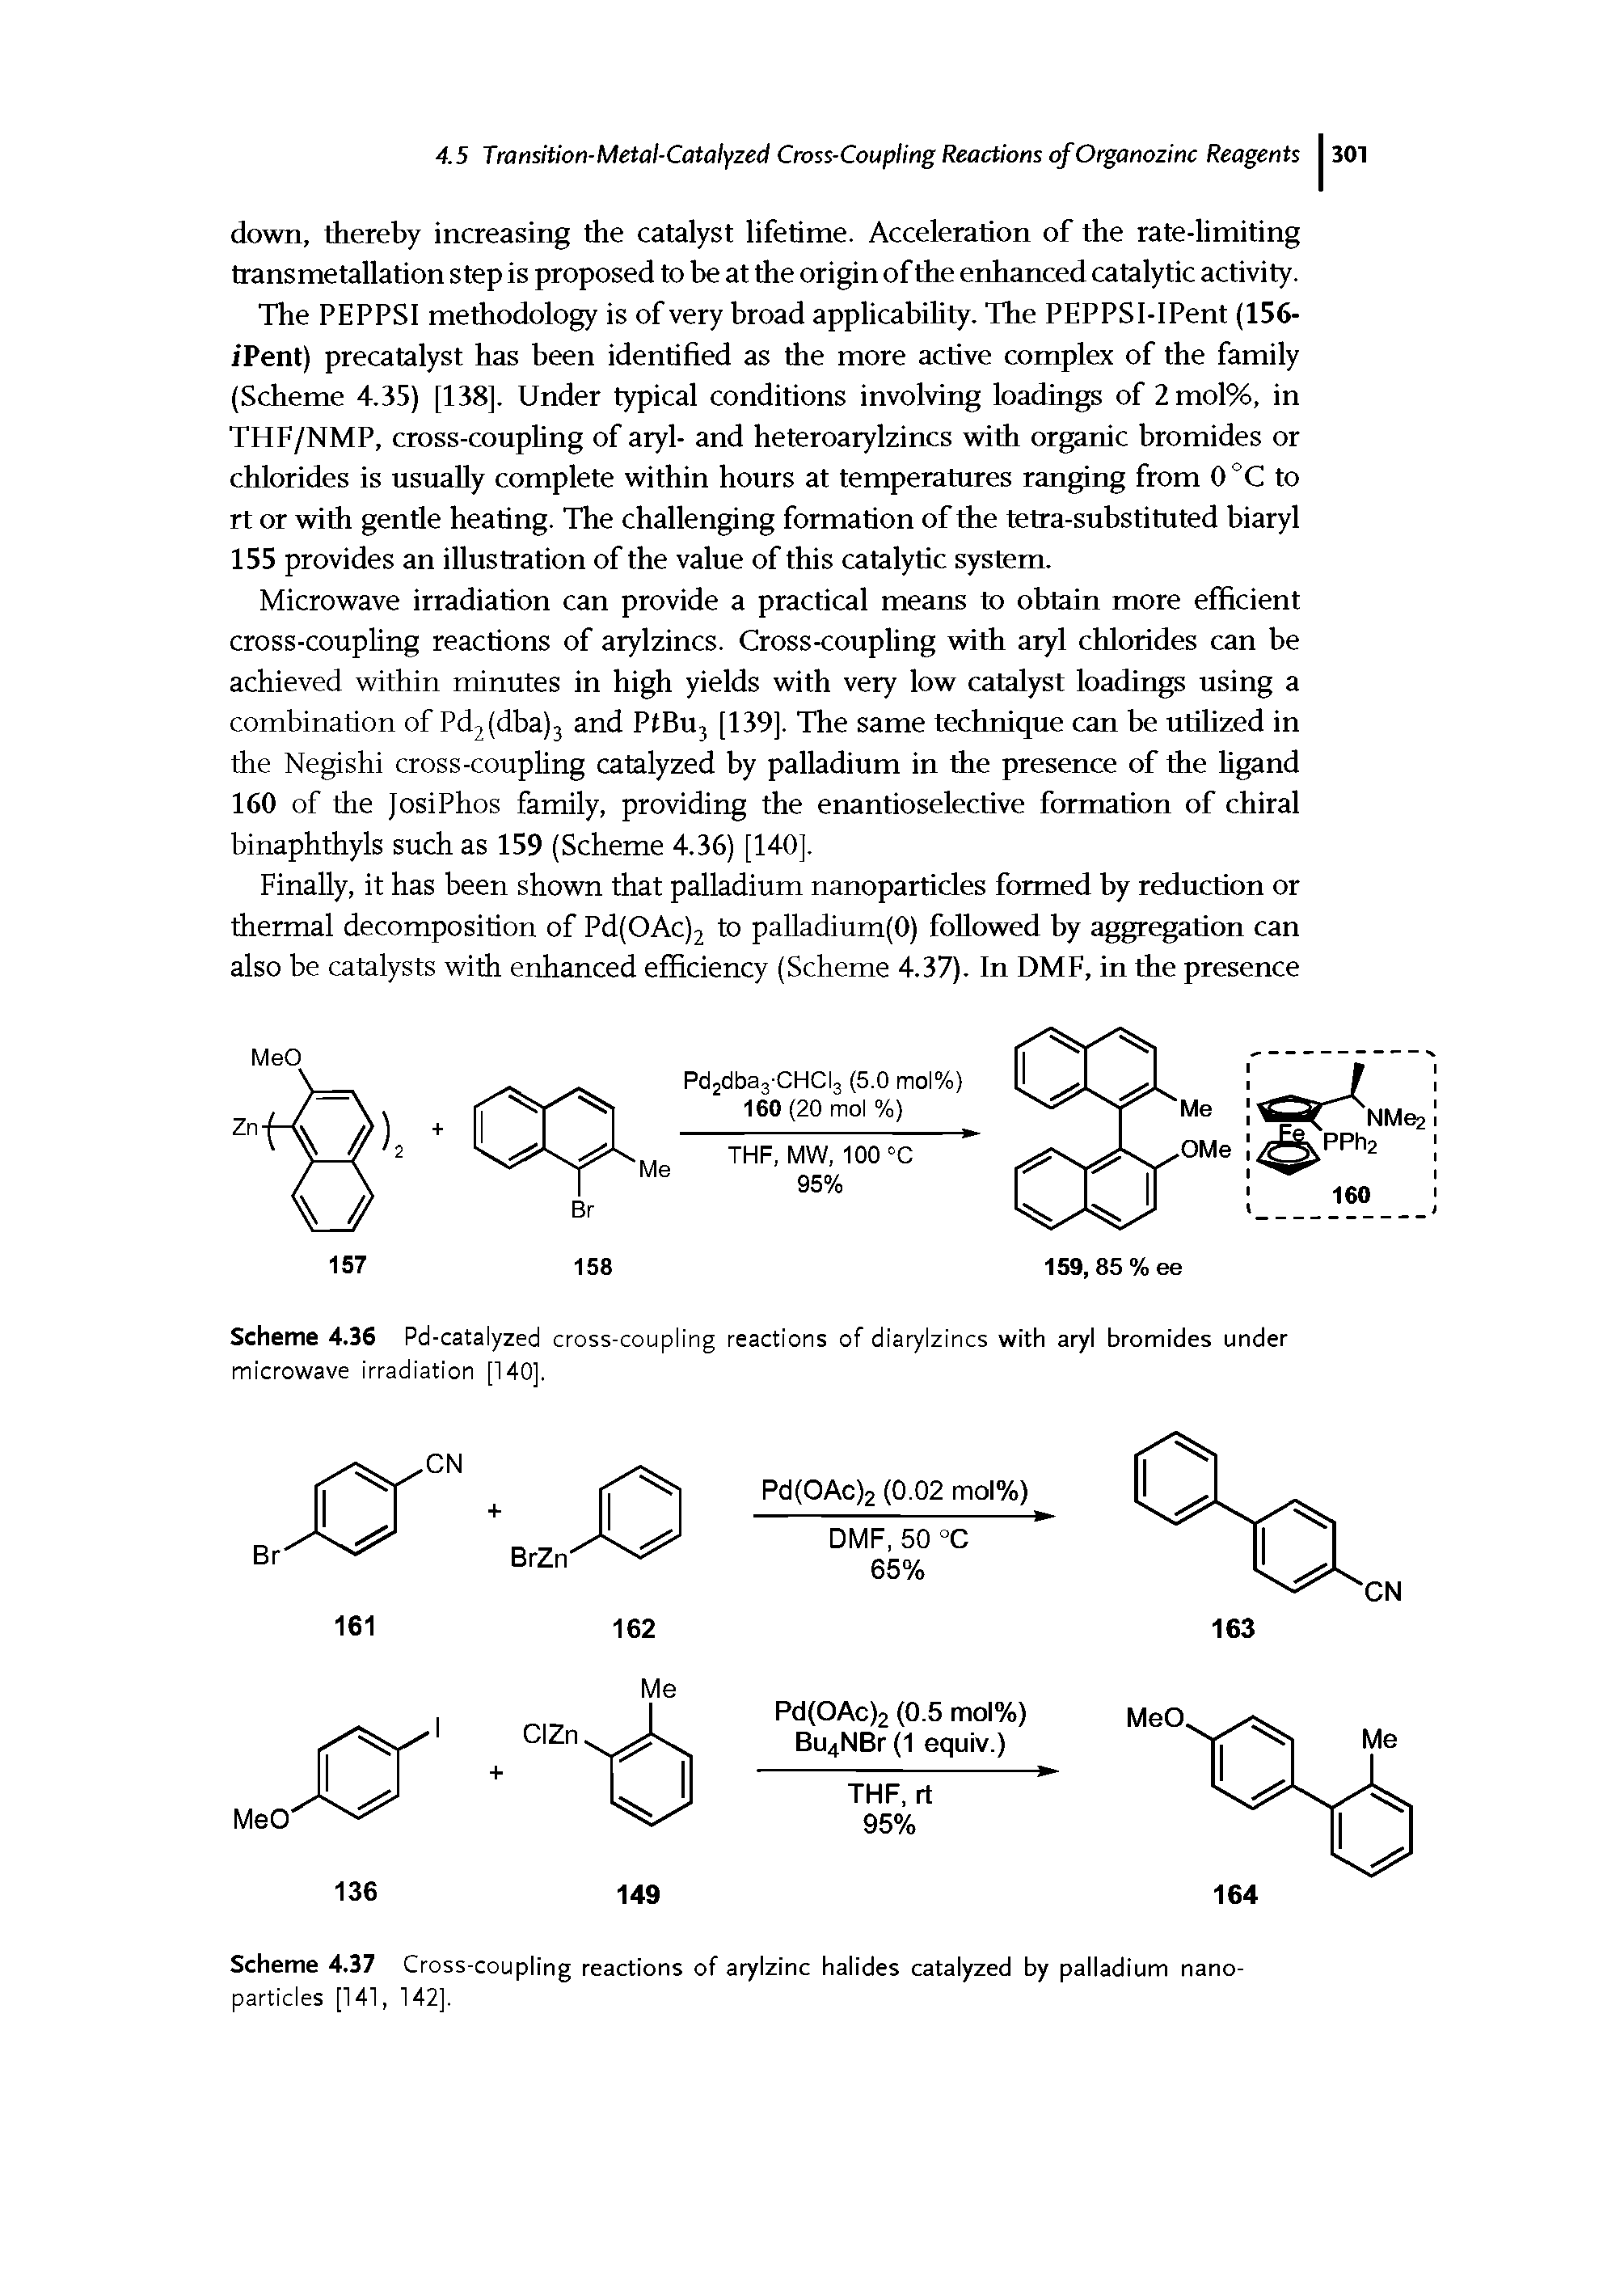 Scheme 4.37 Cross-coupling reactions of arylzinc halides catalyzed by palladium nanoparticles [141, 142].